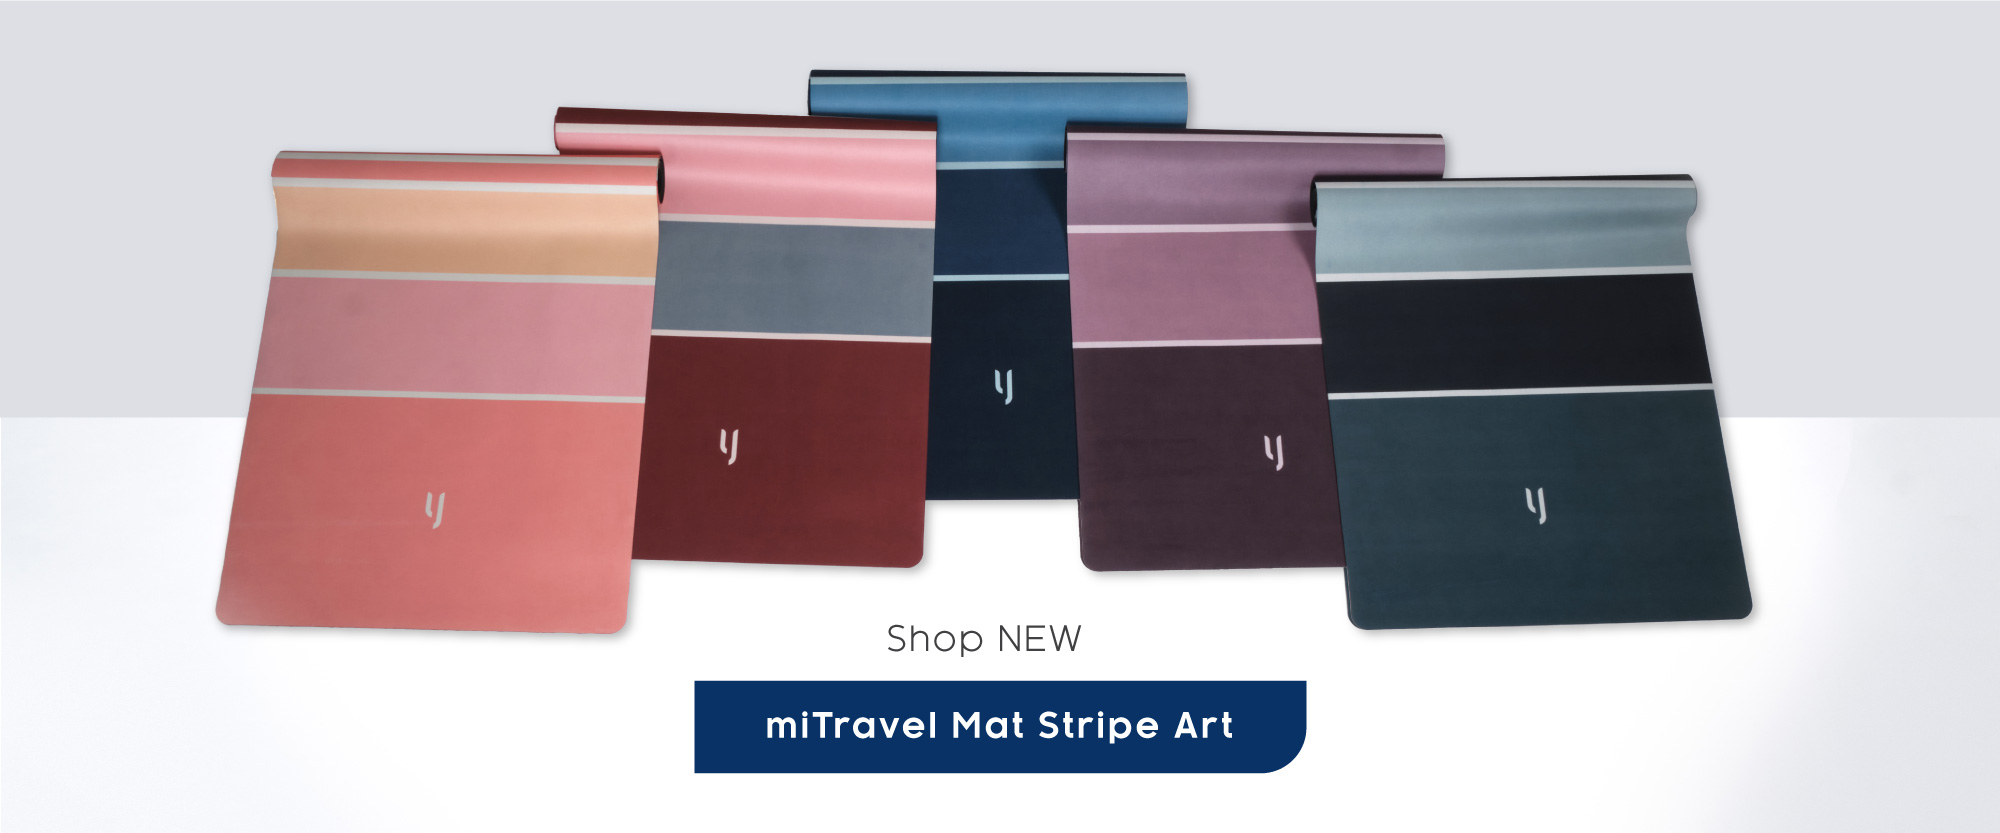 miTravel Mat Stripe Art